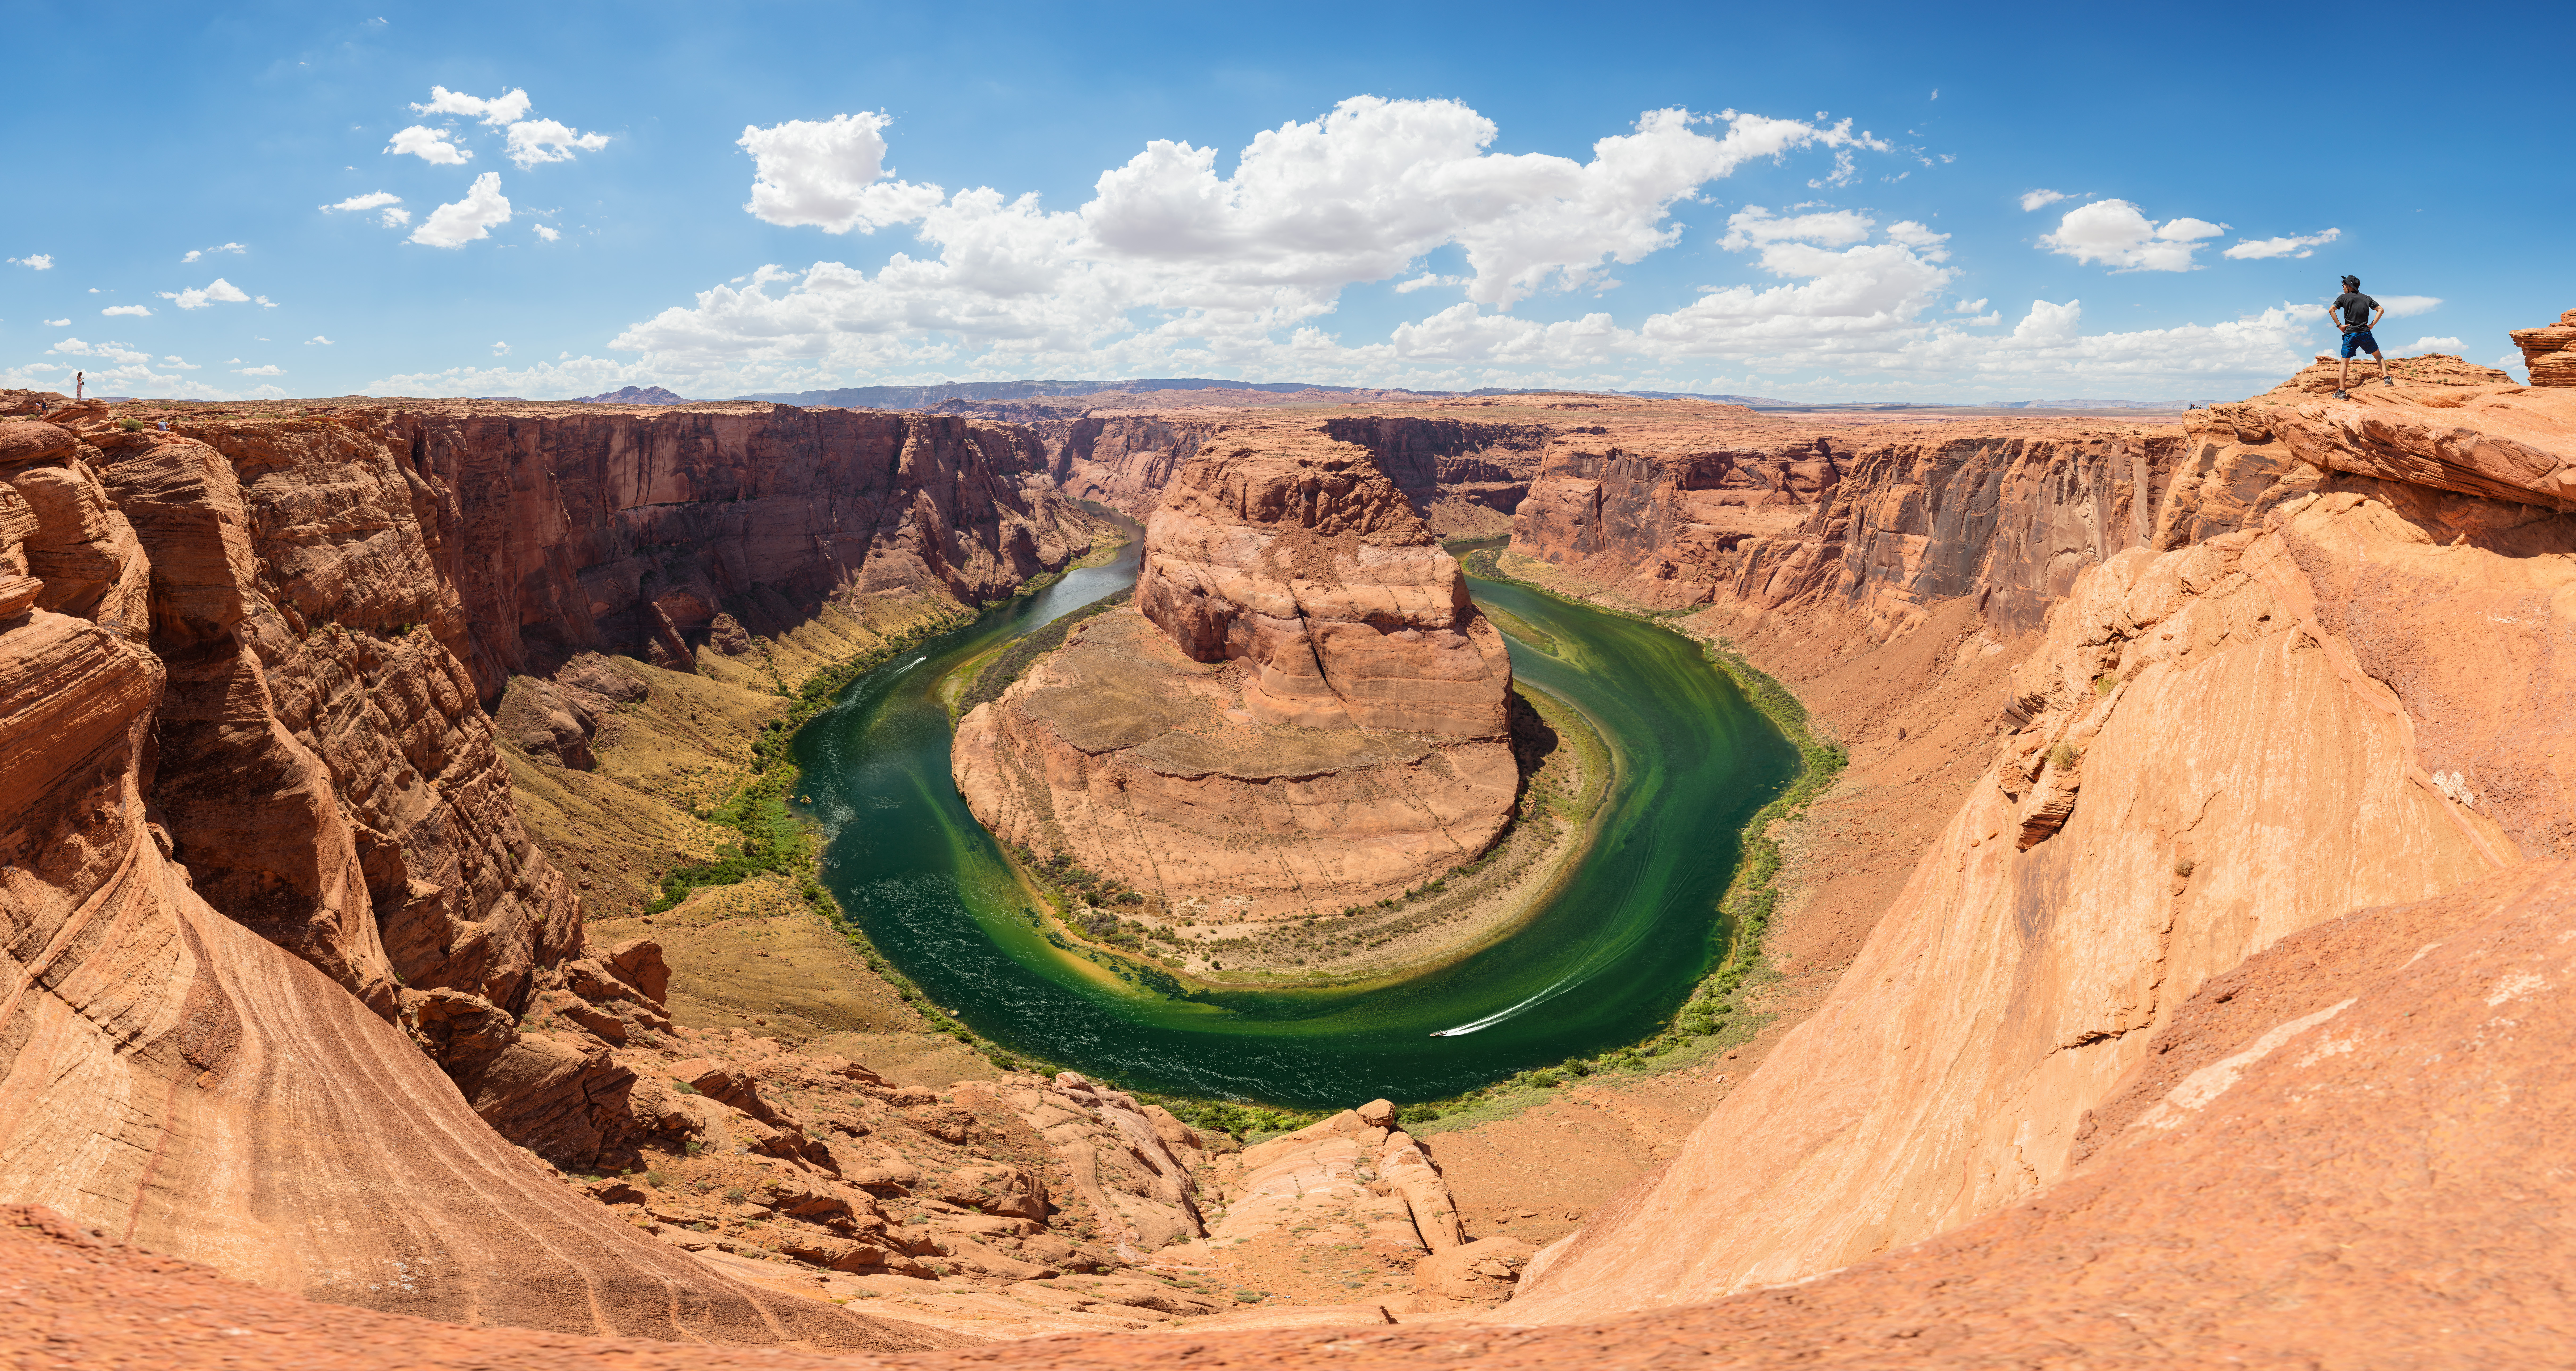 File:Grand Canyon Horseshoe Bend (50MP).jpg - Wikimedia Commons